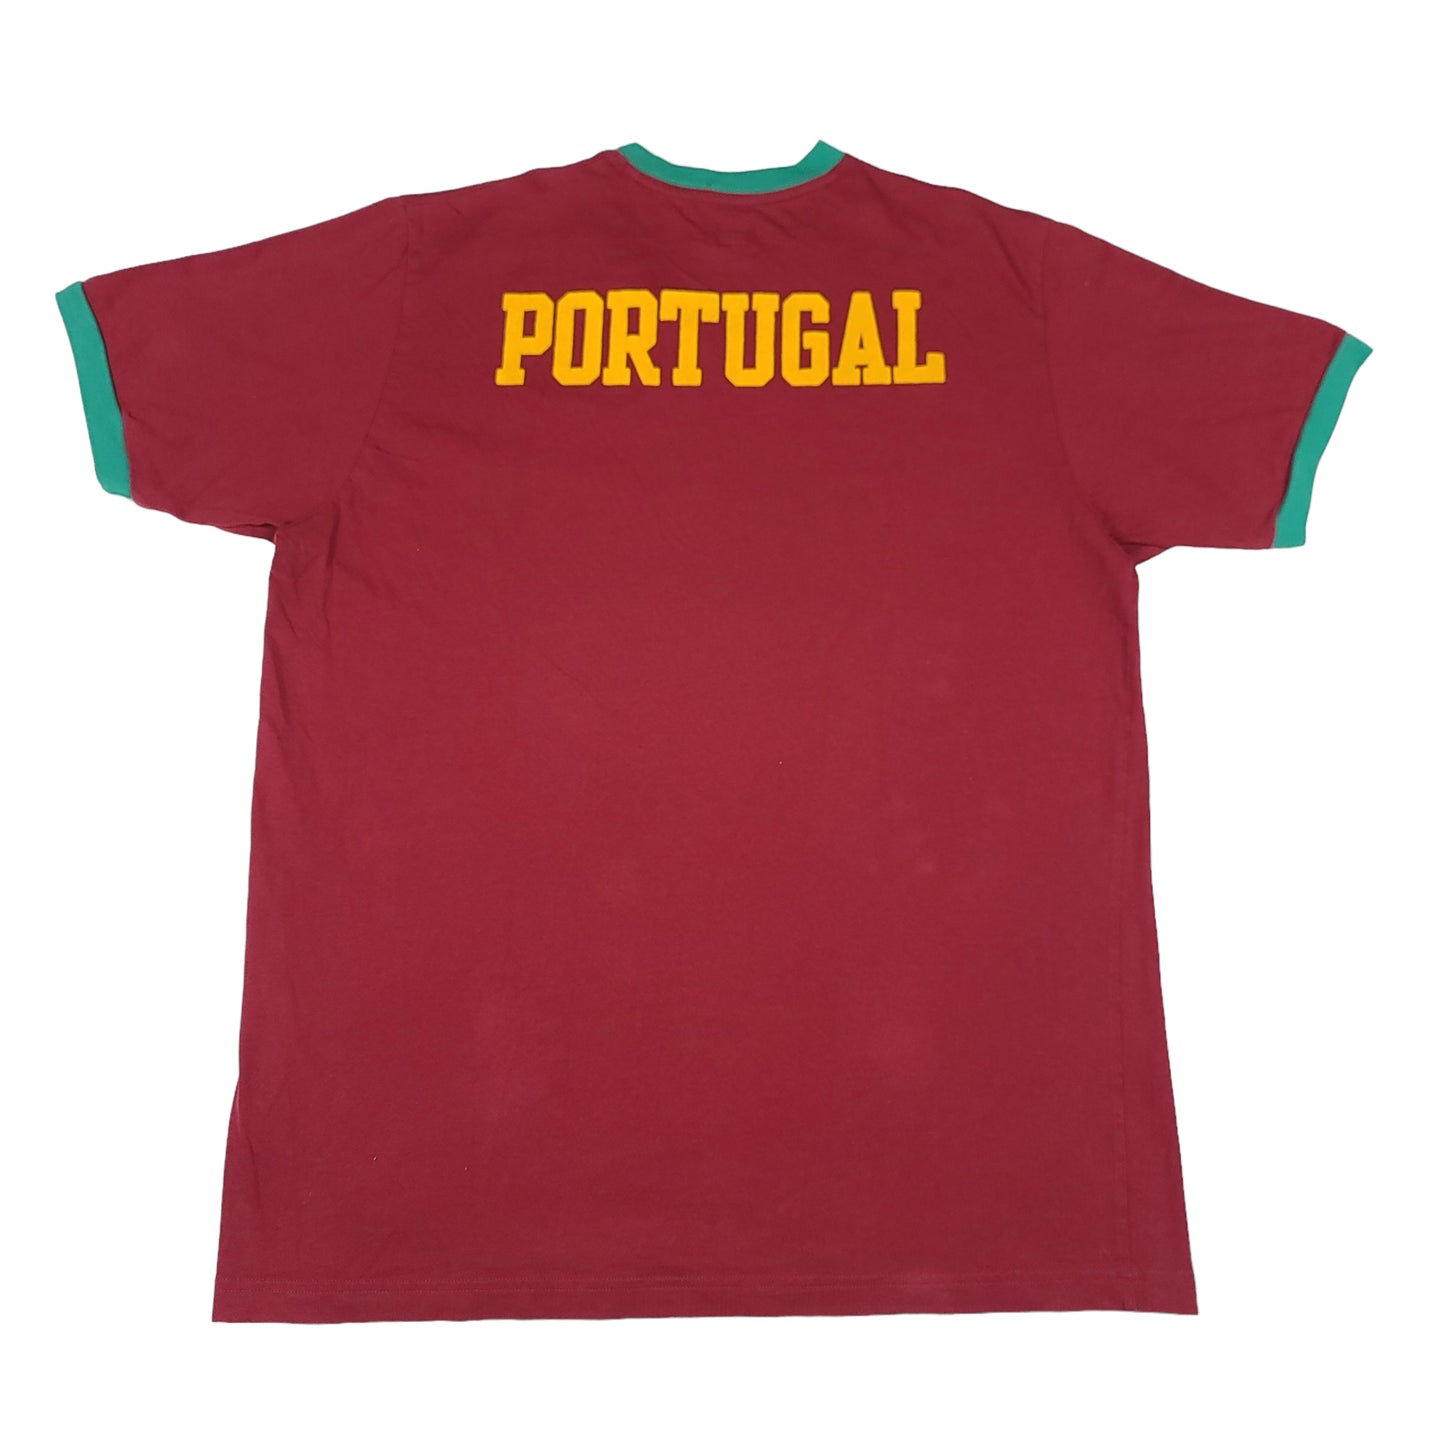 Retro adidas Portugal Fifa 1974 Jersey Tee